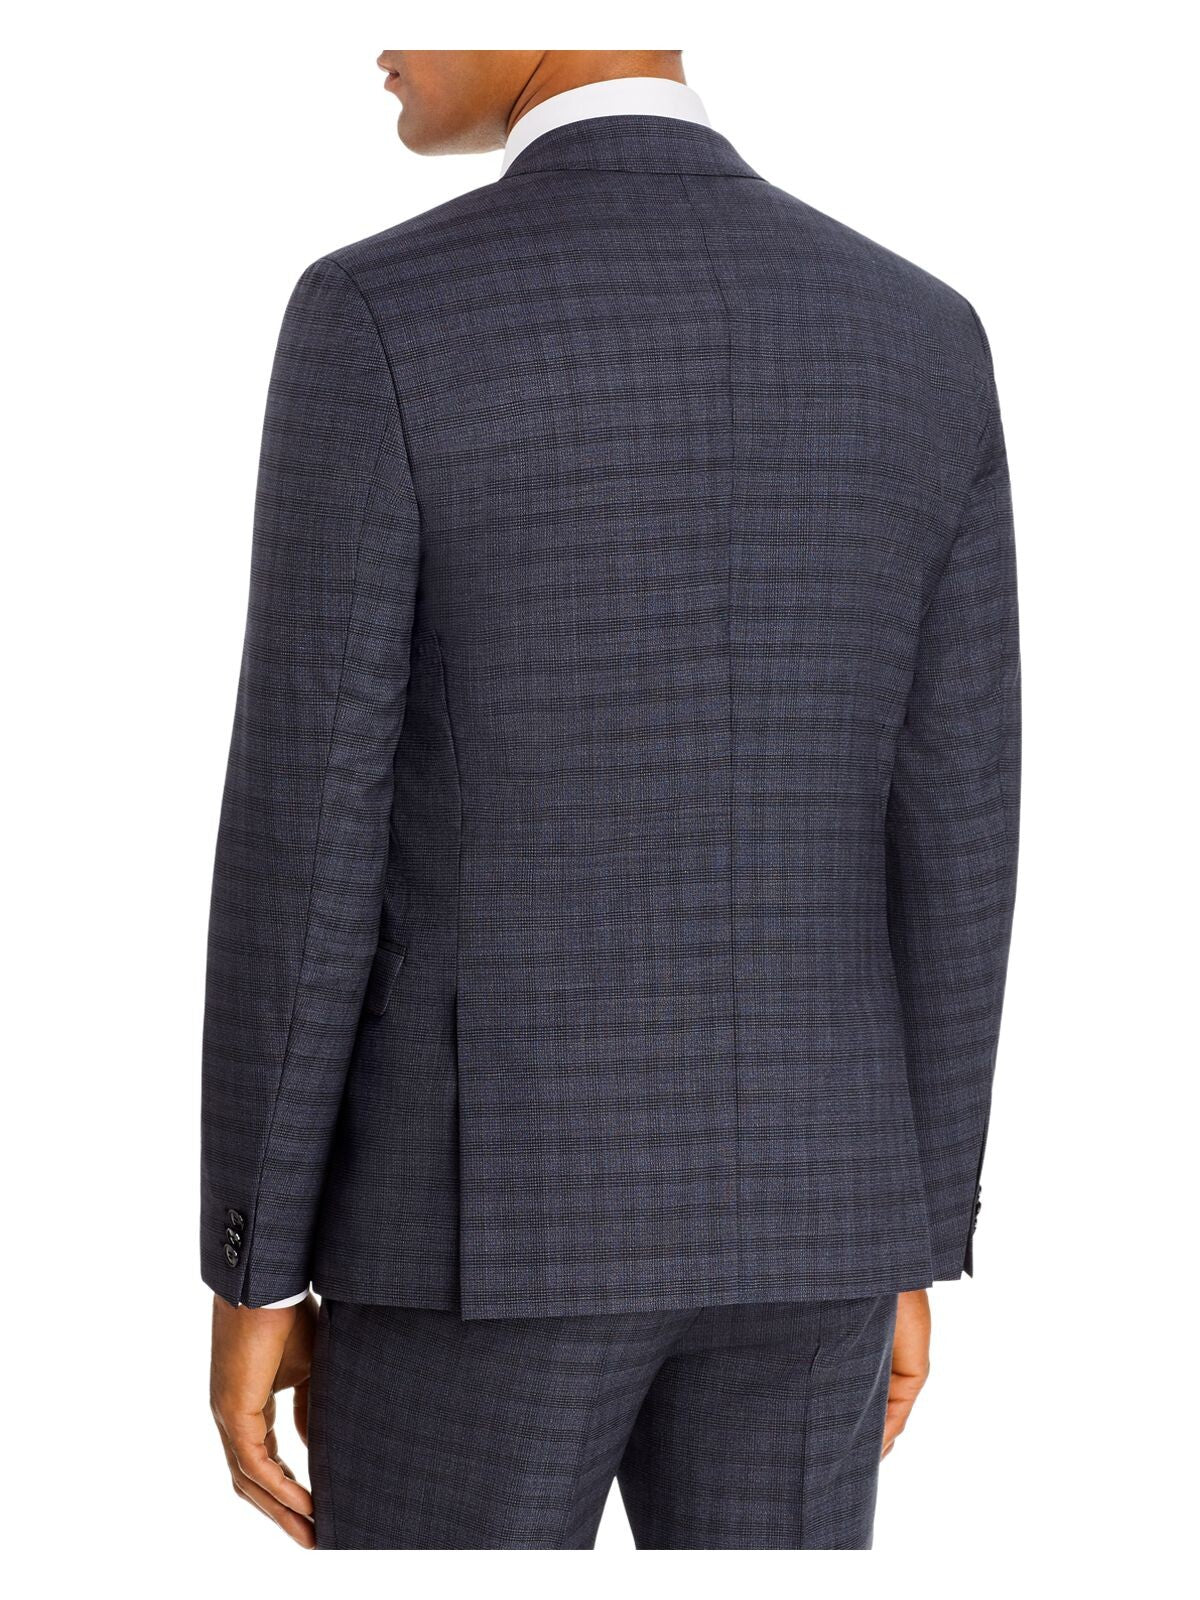 HUGO BOSS Mens Arti Navy Single Breasted, Plaid Extra Slim Fit Wool Blend Suit Separate Blazer Jacket 40R